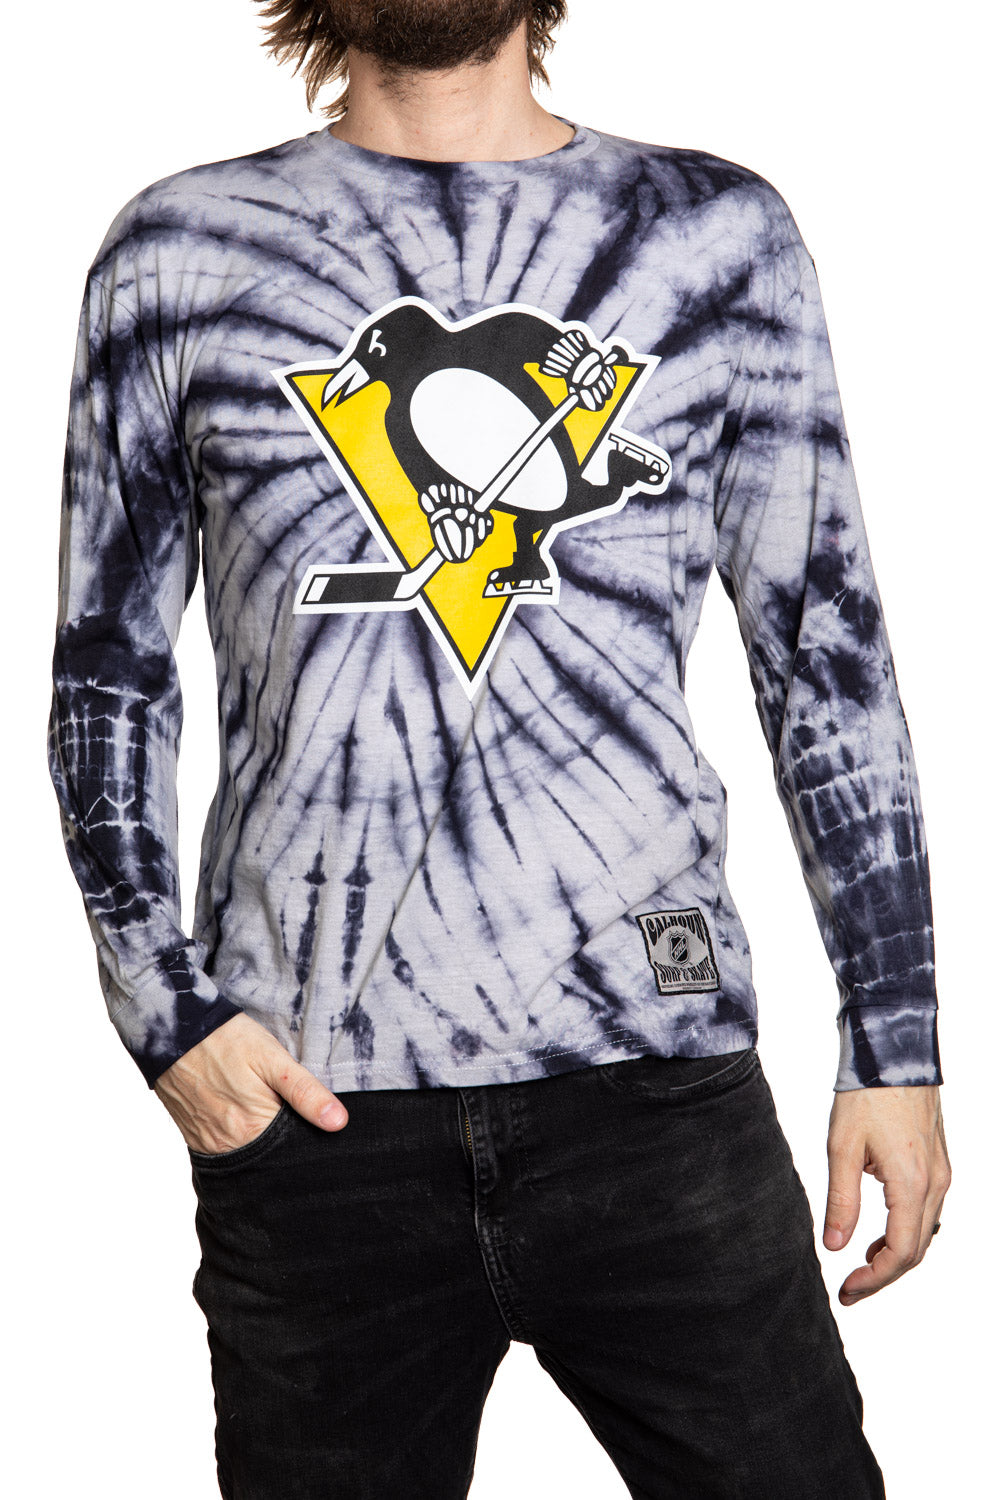 Pittsburgh Penguins Spiral Tie Dye Longsleeve Shirt